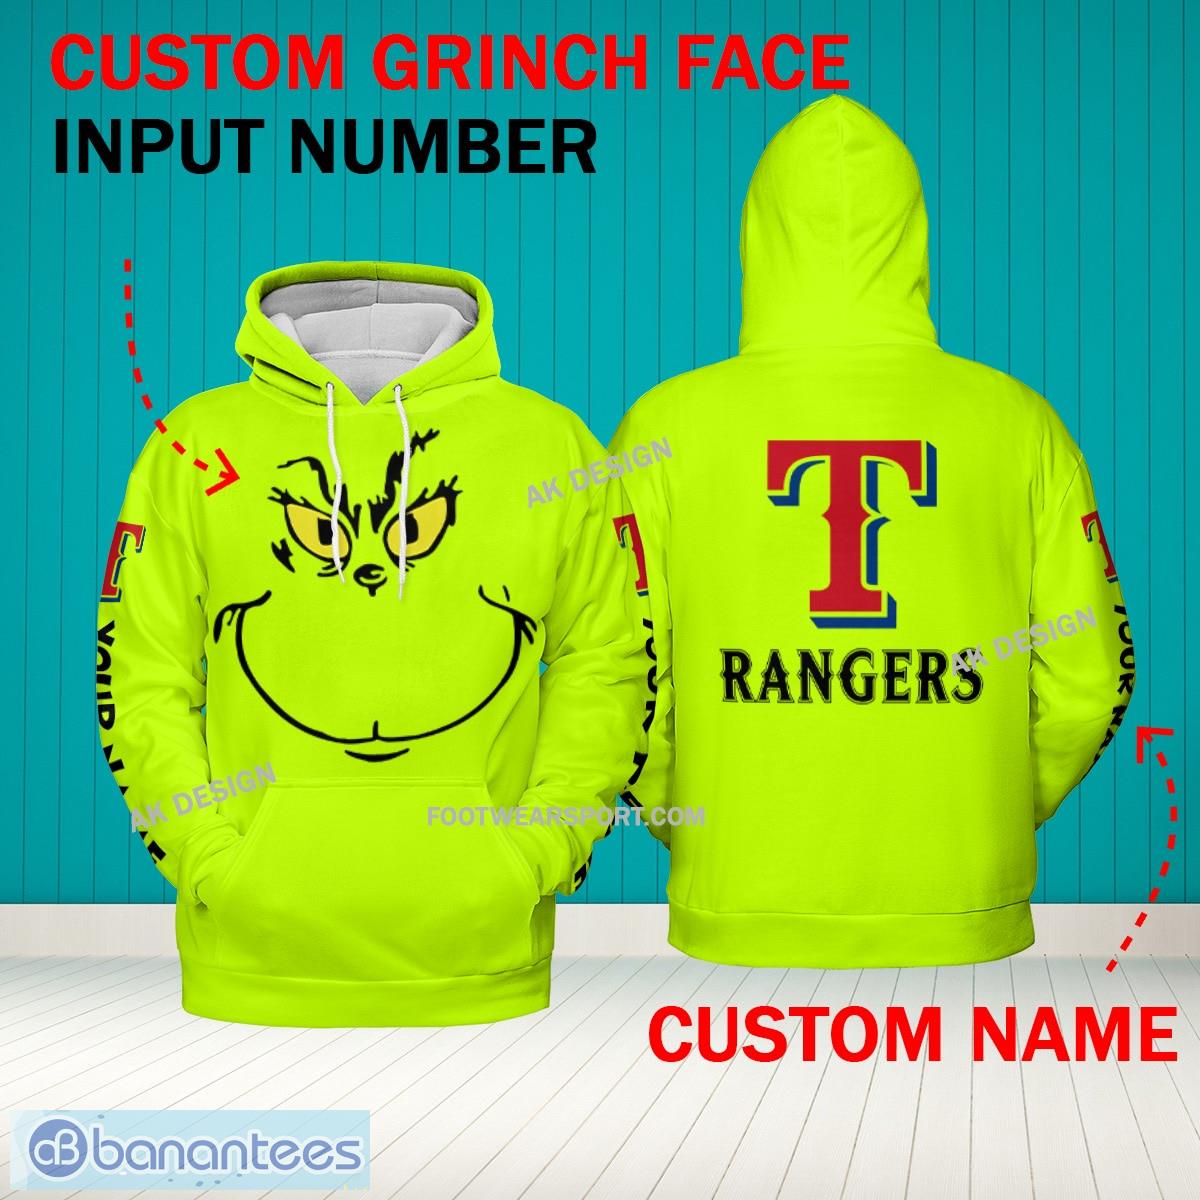 Grinch Face Texas Rangers 3D Hoodie, Zip Hoodie, Sweater Green AOP Custom Number And Name - Grinch Face MLB Texas Rangers 3D Hoodie